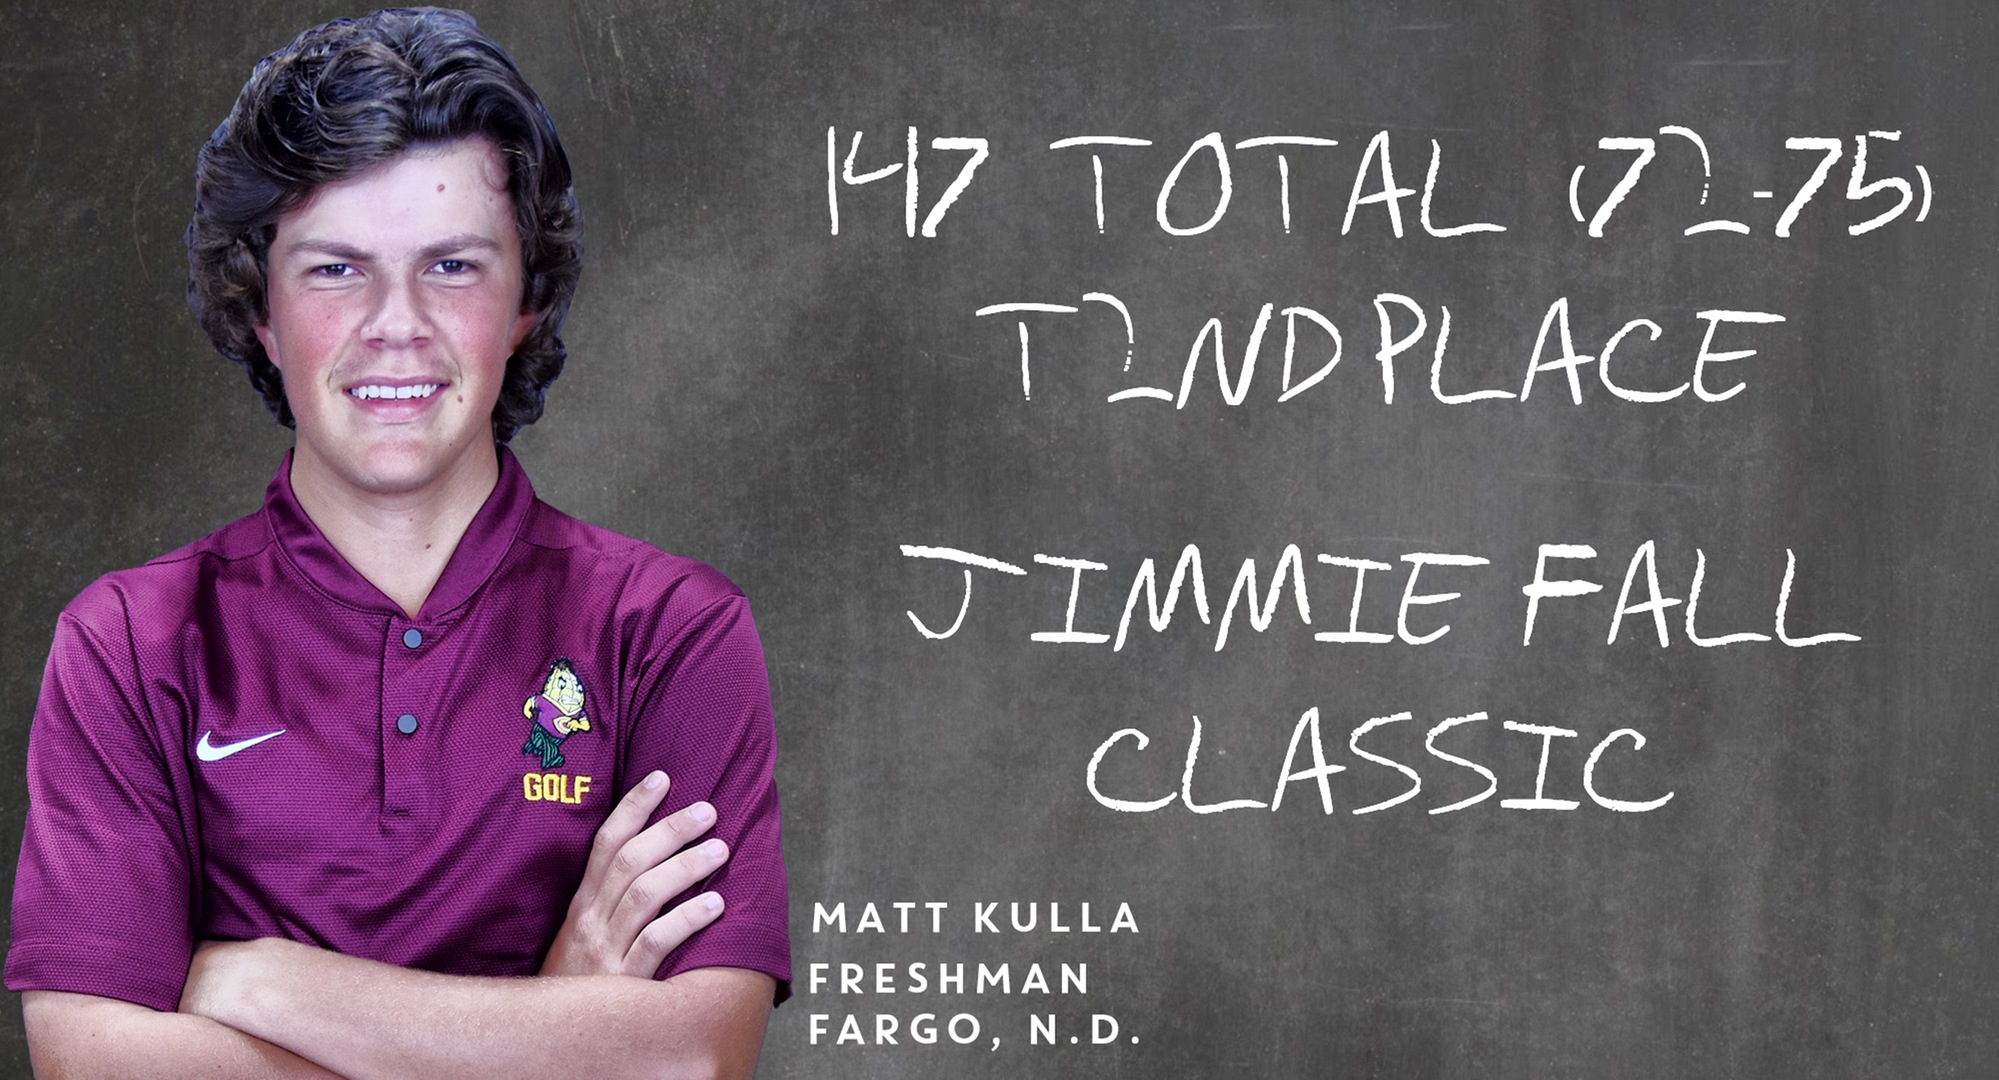 Freshman Matt Kulla recorded his second Top 3 finish of the season at the Jimmie Fall Classic.